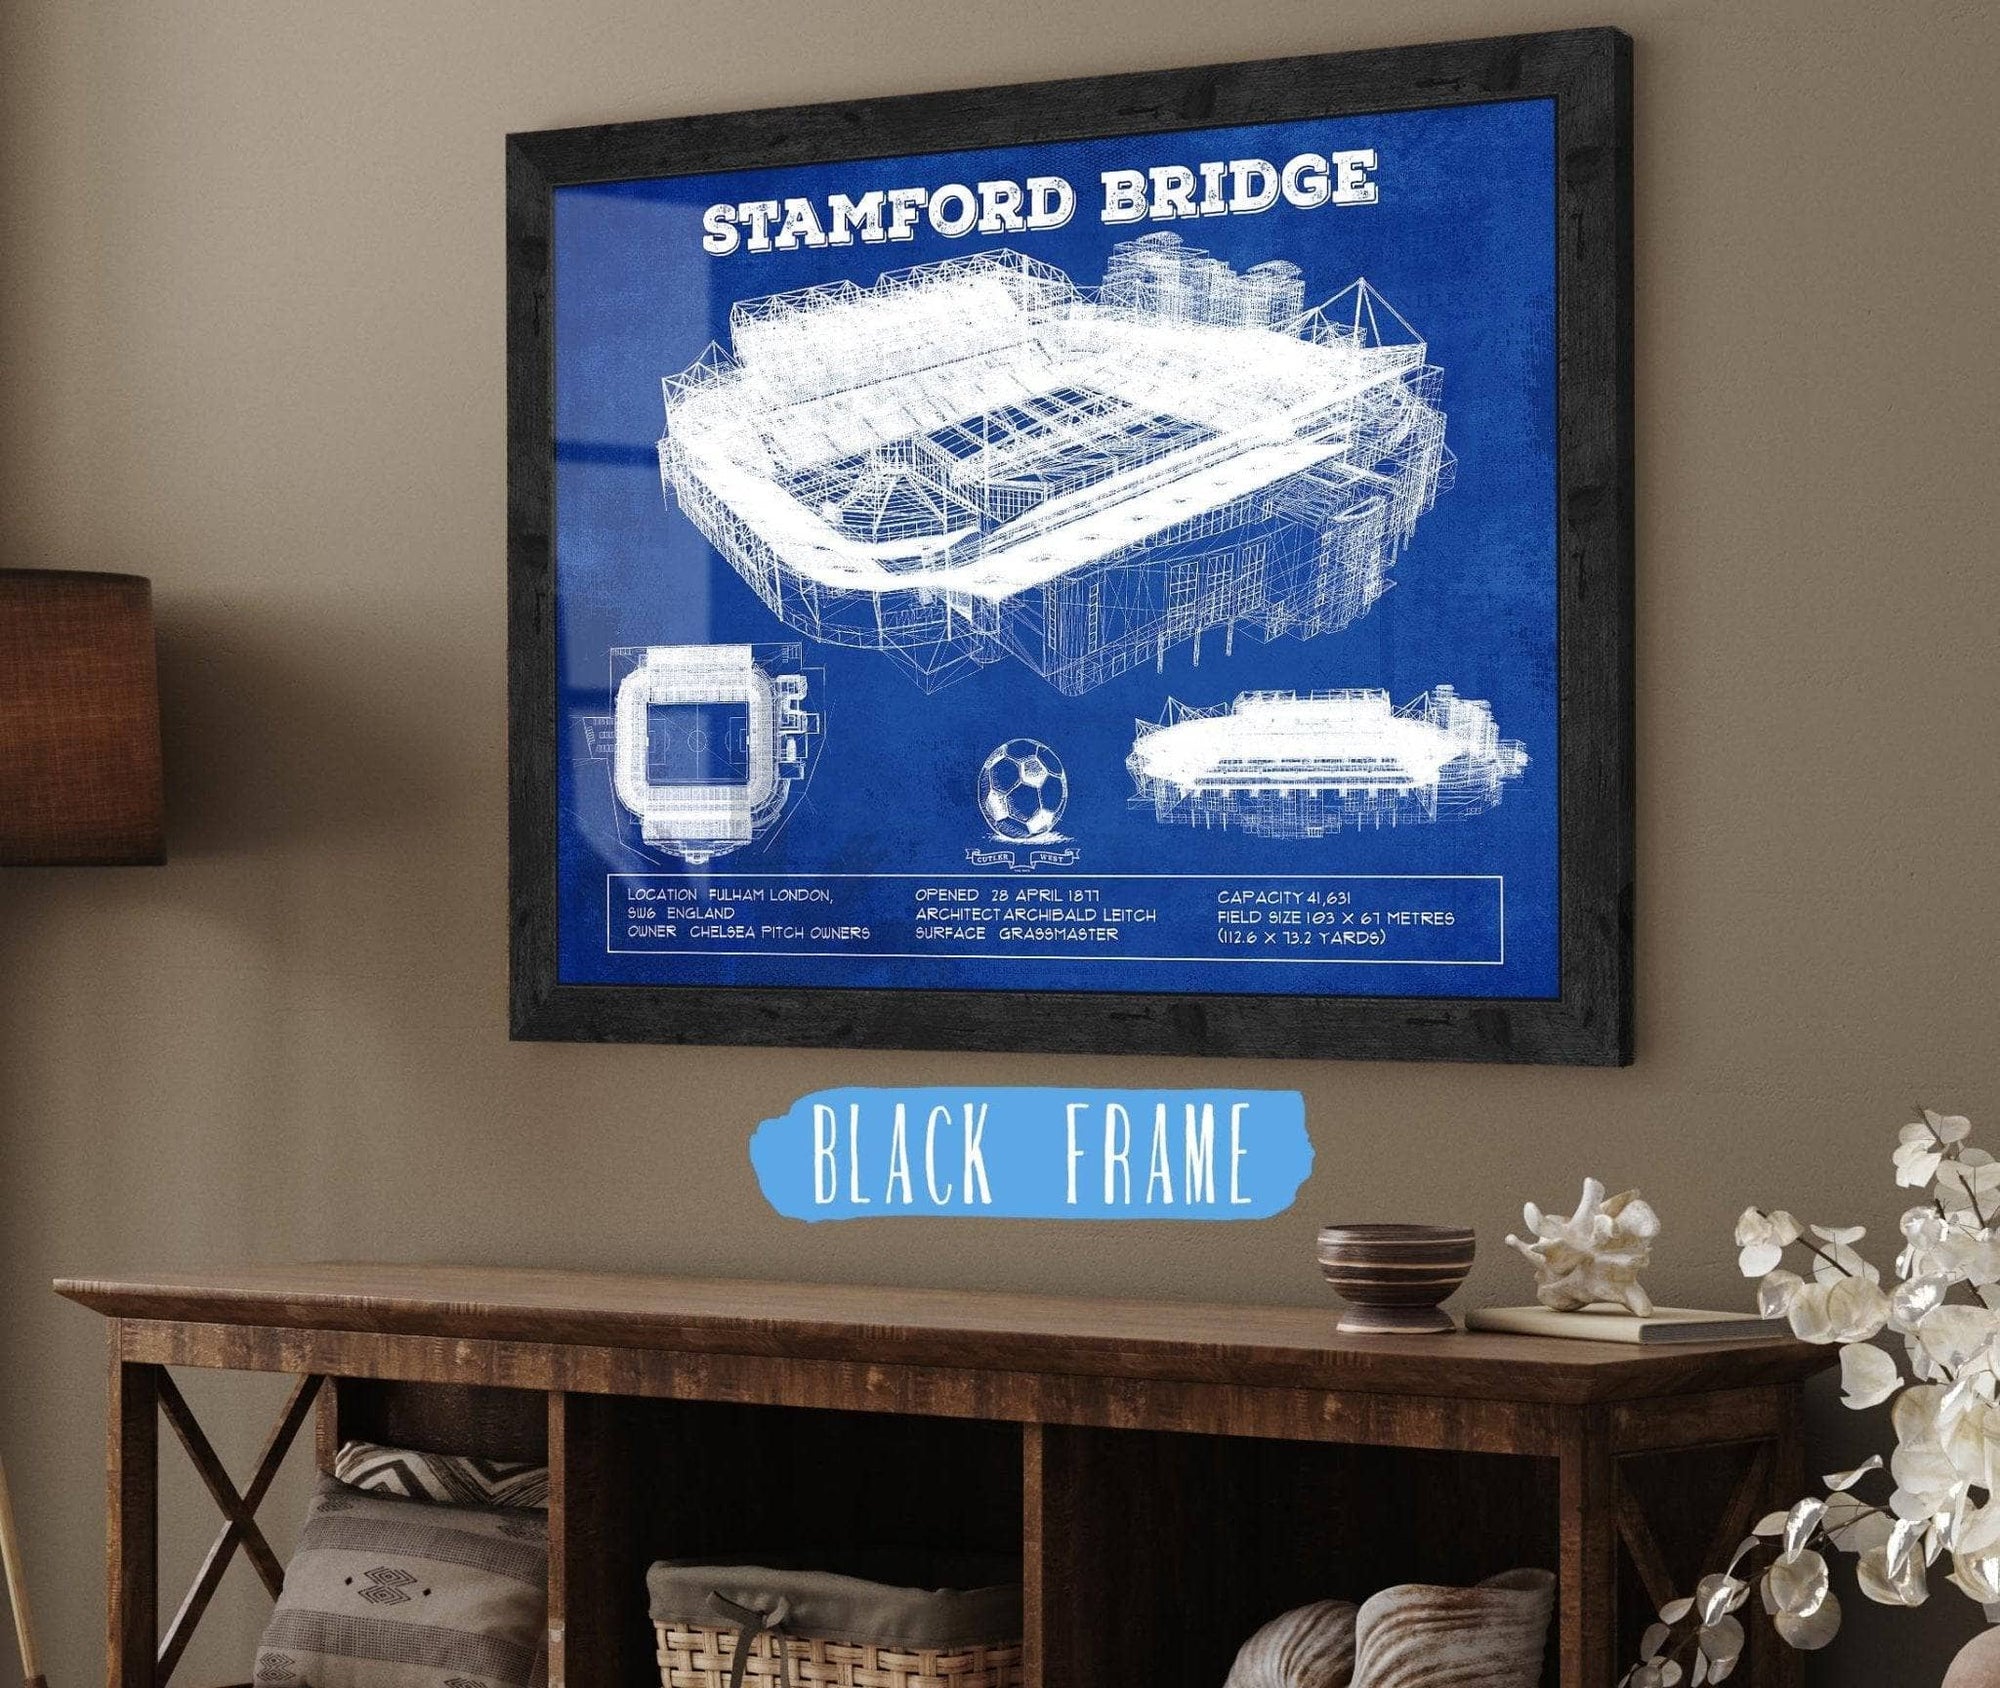 Cutler West Soccer Collection 14" x 11" / Black Frame Stamford Bridge - Chelsea FC European Football Soccer Stadium Print 700225520-TOP